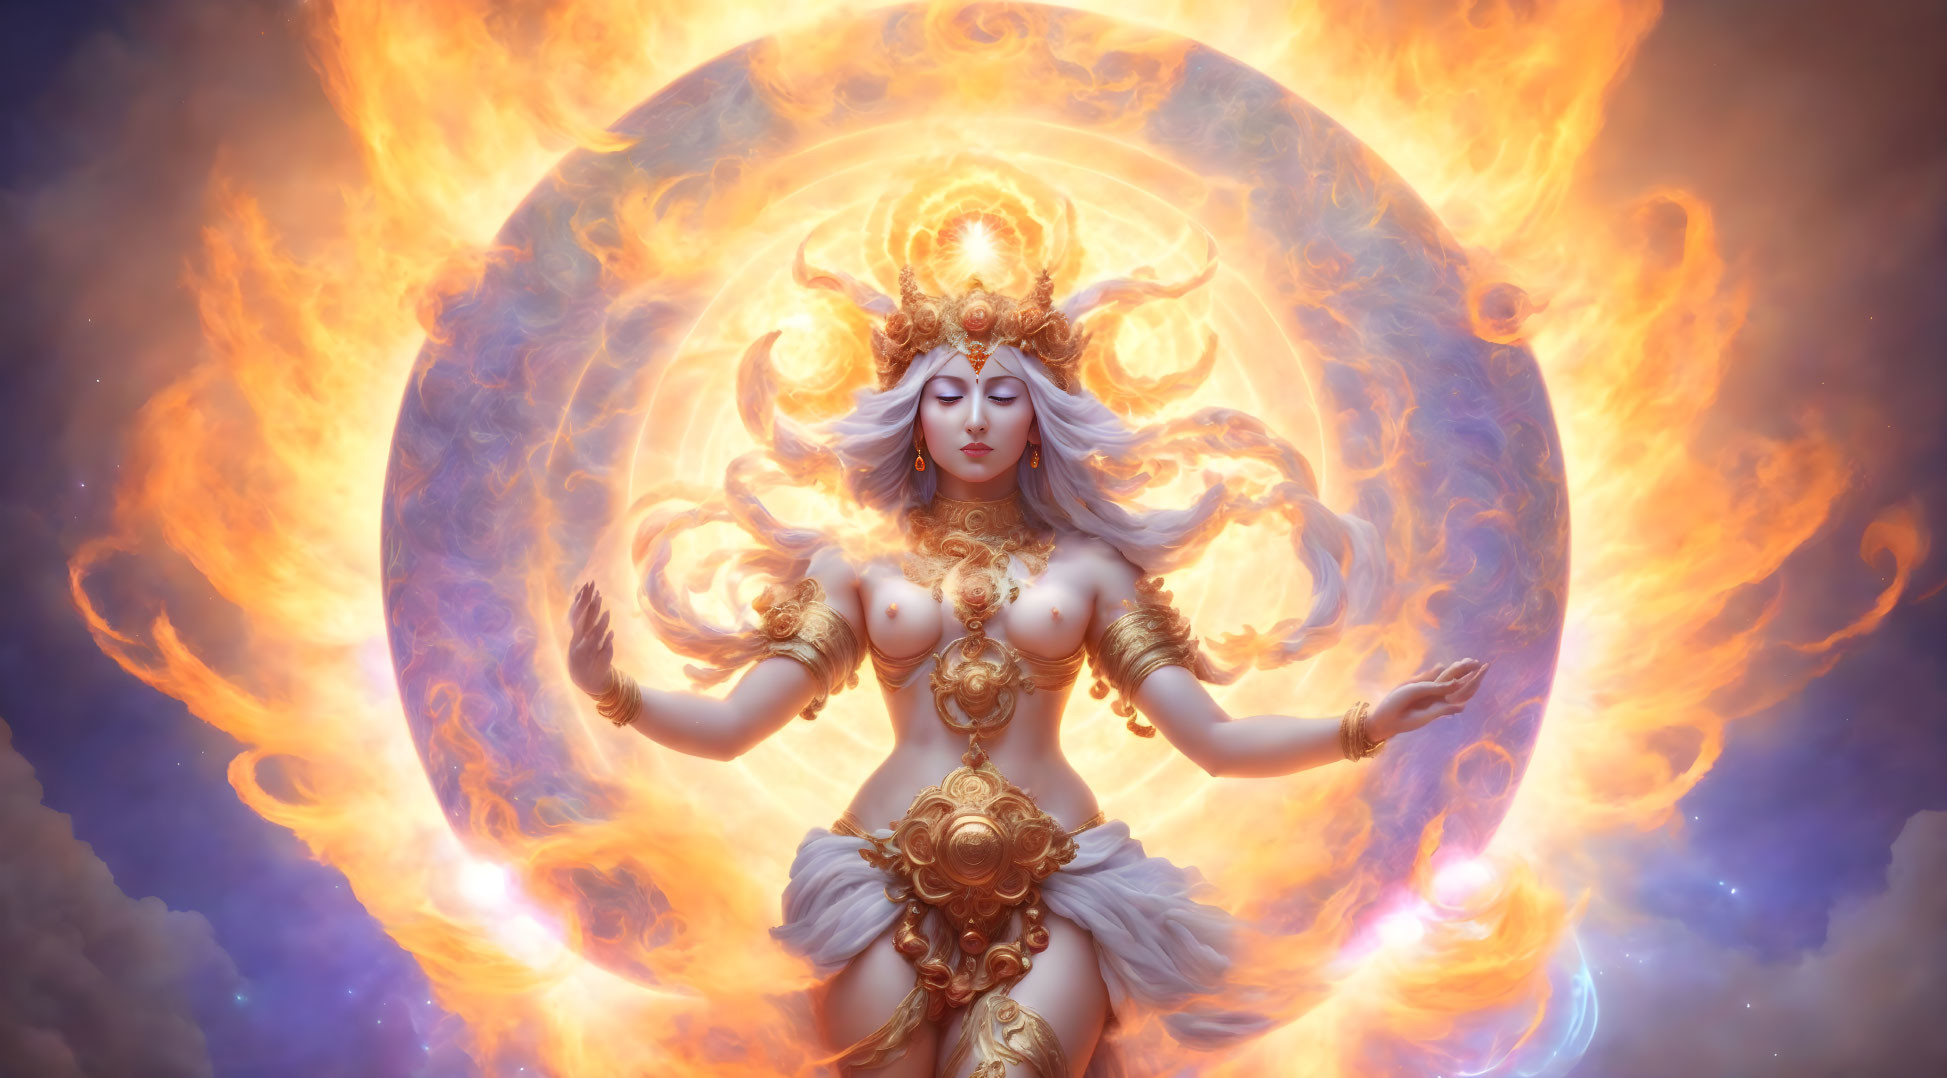 Goddess with a powerful aura around